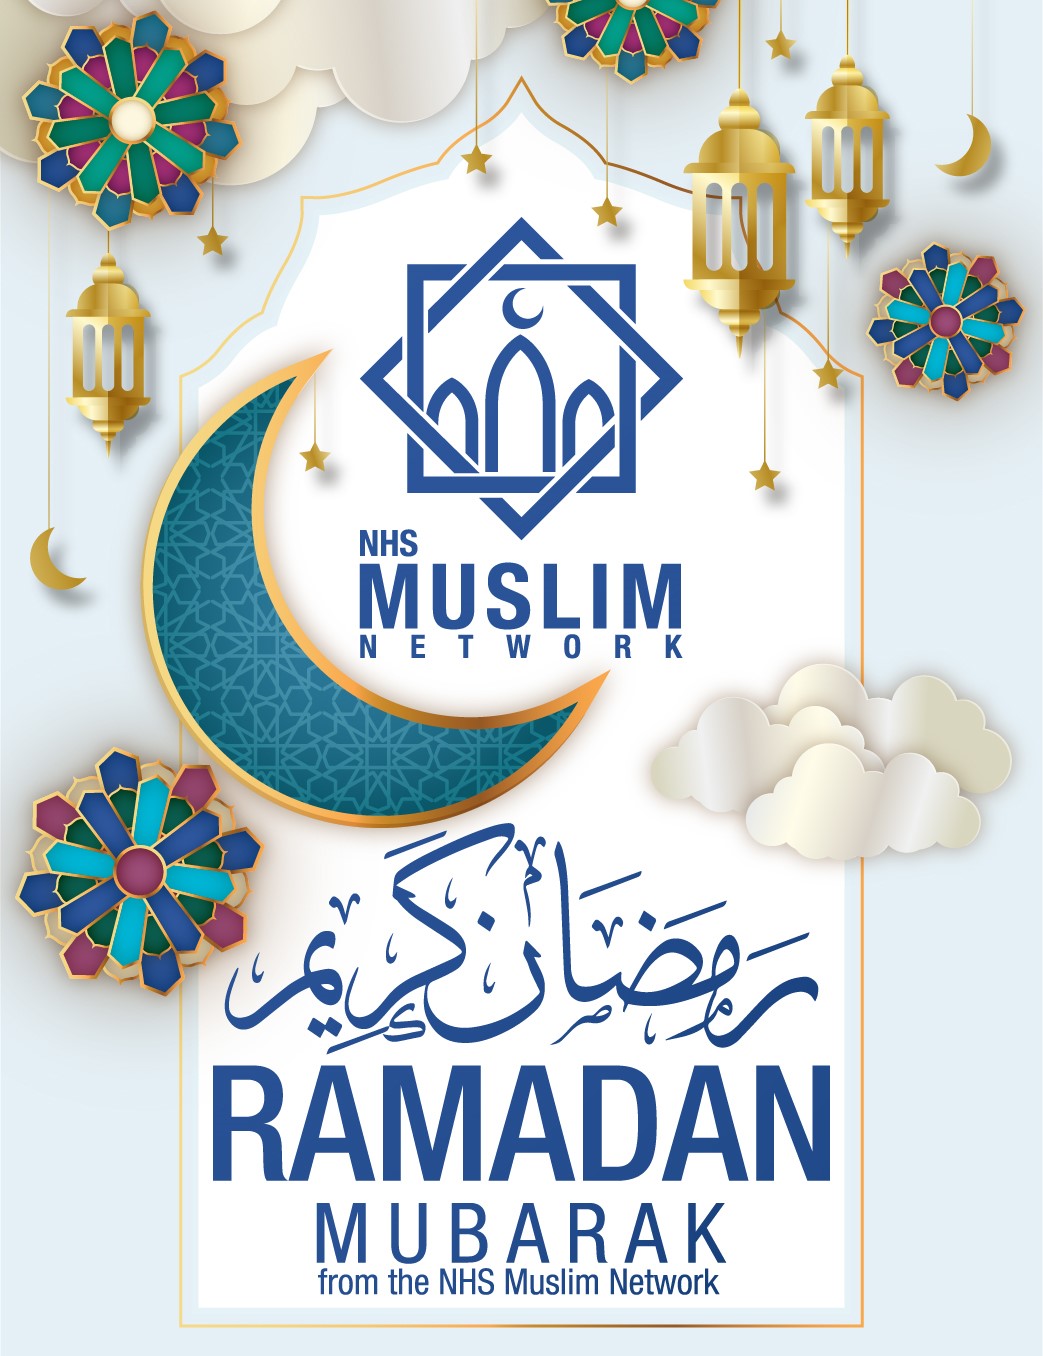 BJIT on LinkedIn: Ramadan Kareem - The month of blessing